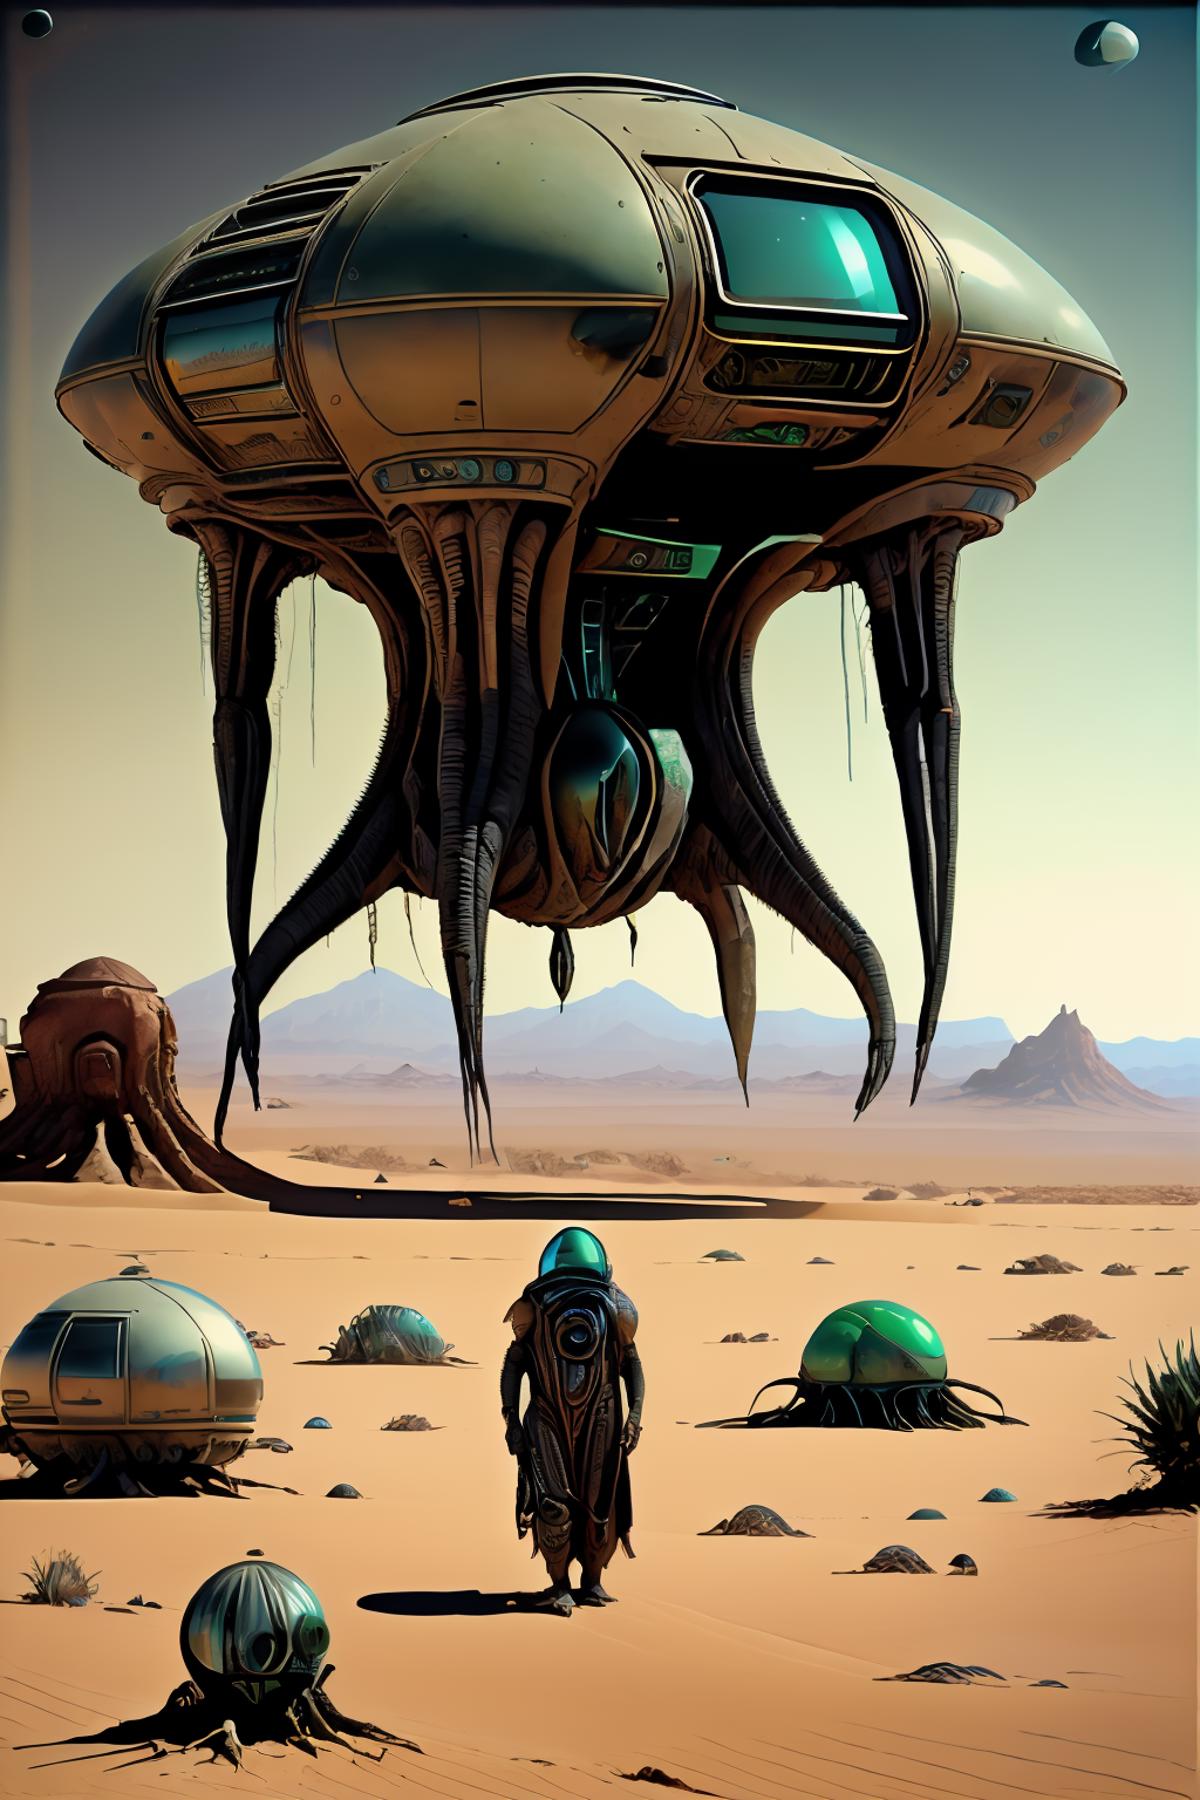 Neo-Alien Nomad image by Ciro_Negrogni